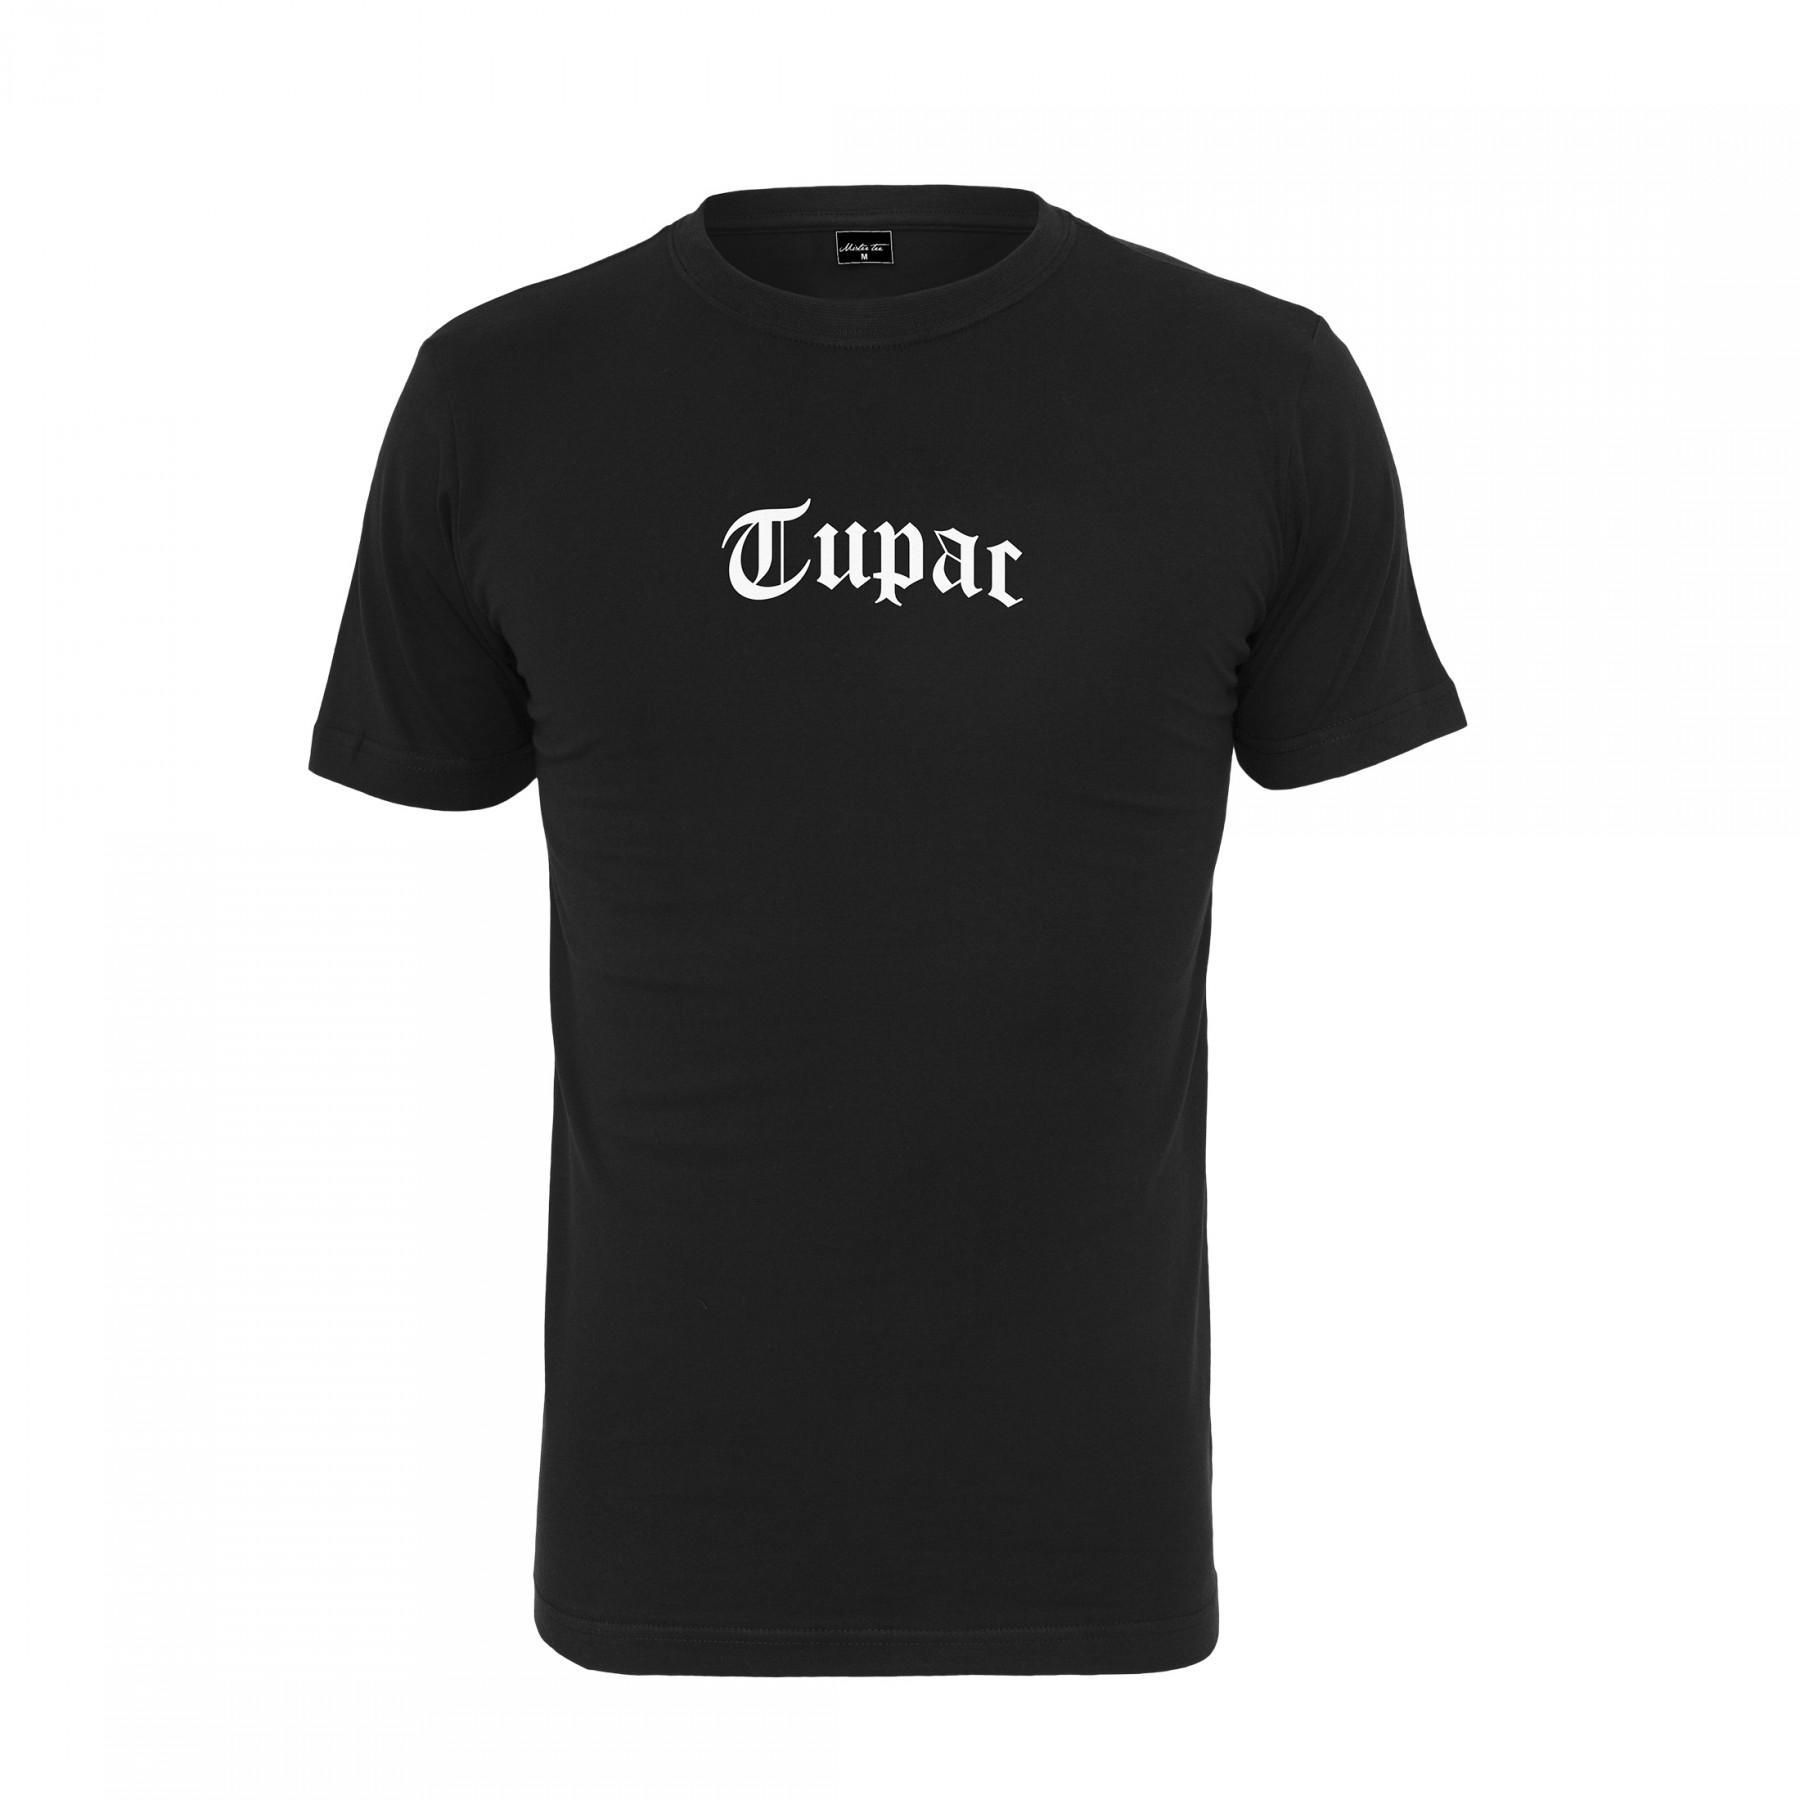 T-shirt Mister Tee tupac ba